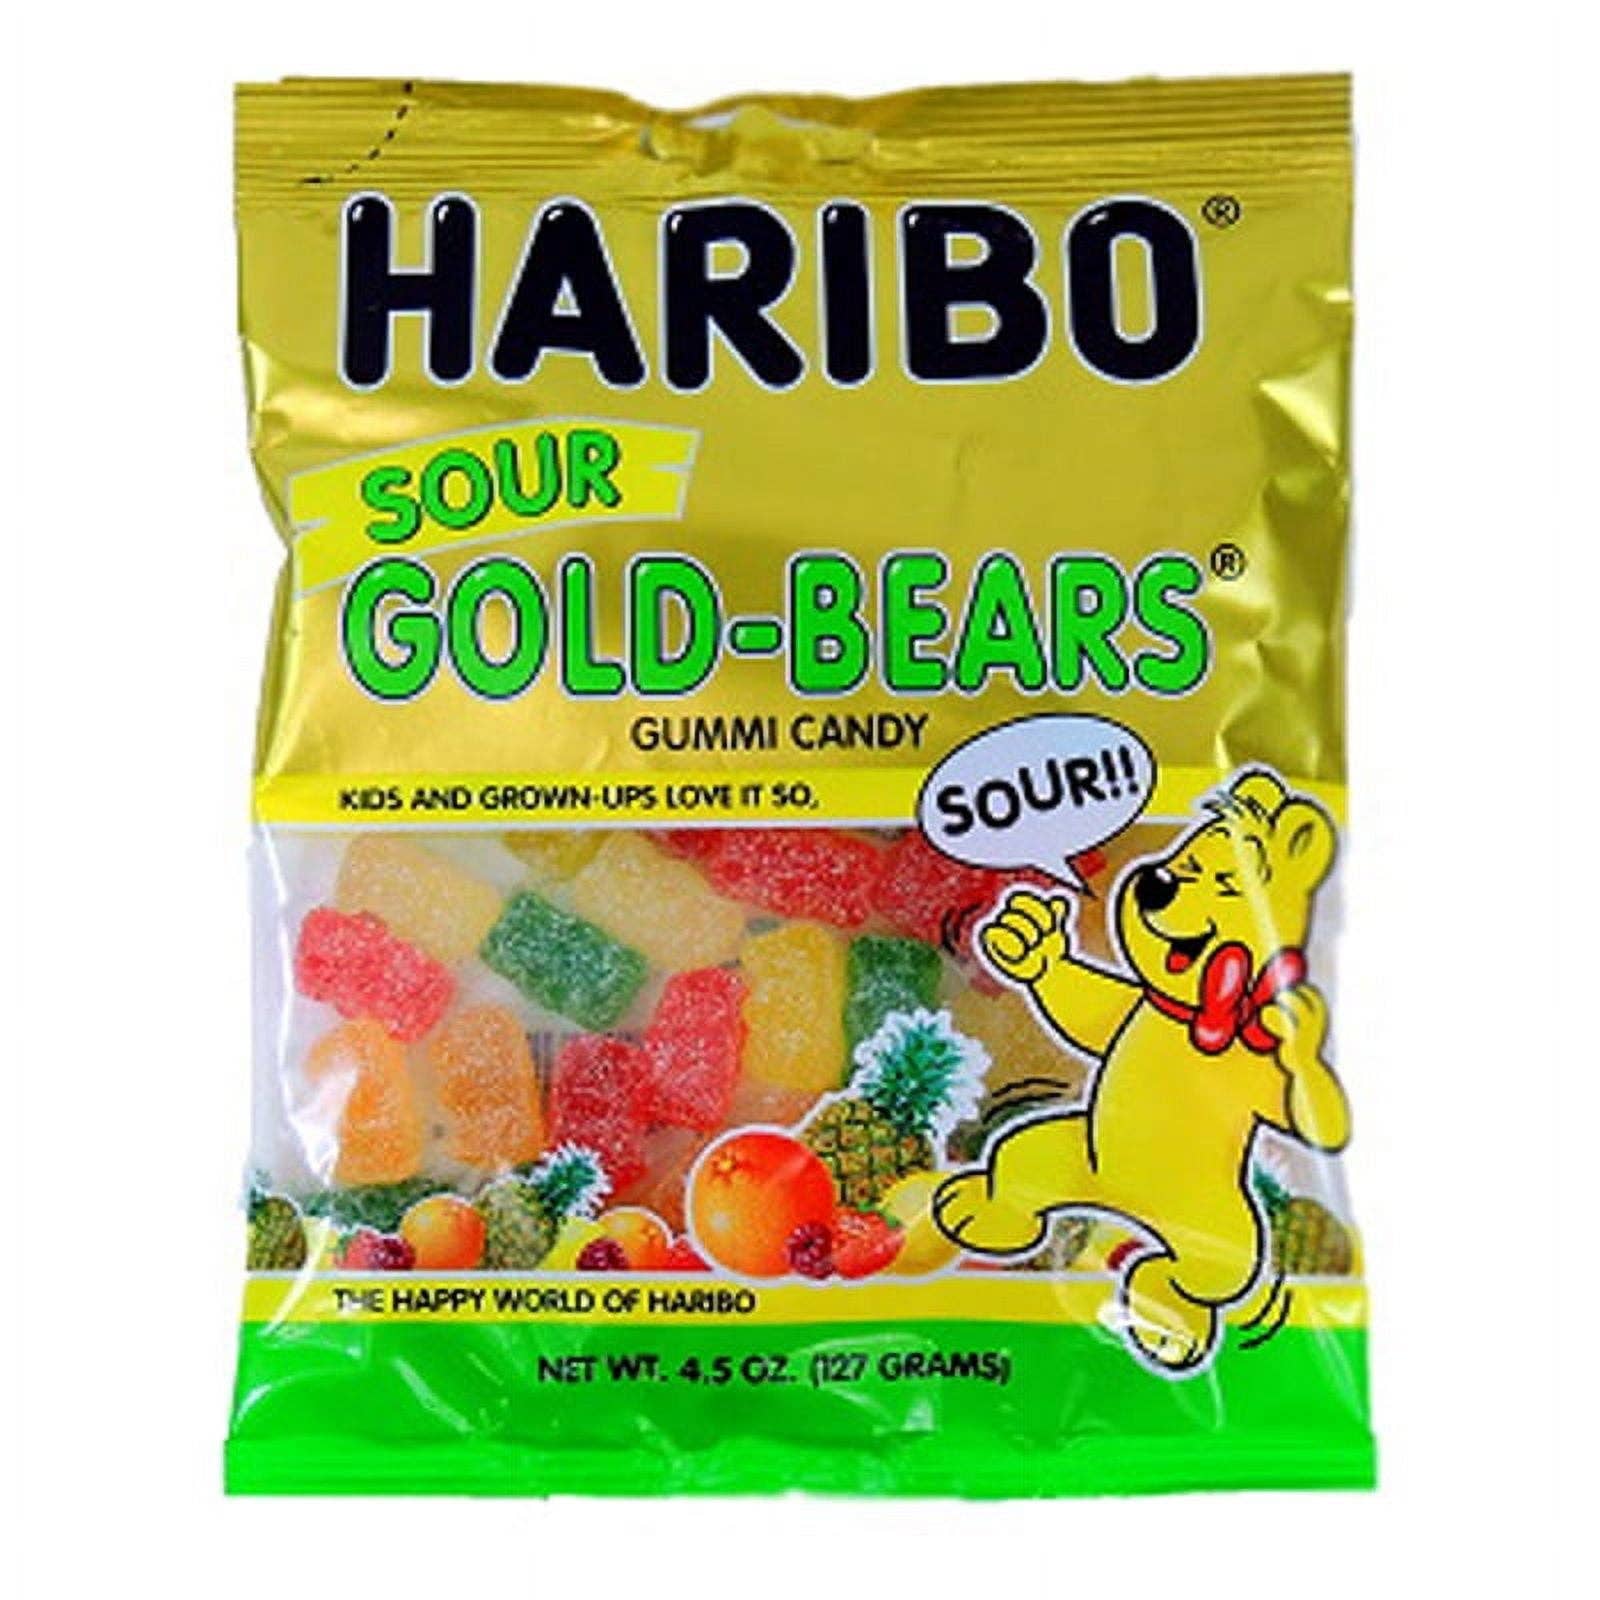 Haribo Peg Sour Gold-Bears Gummies Ct 12 (4.5 Oz) ($2.25/Unit)